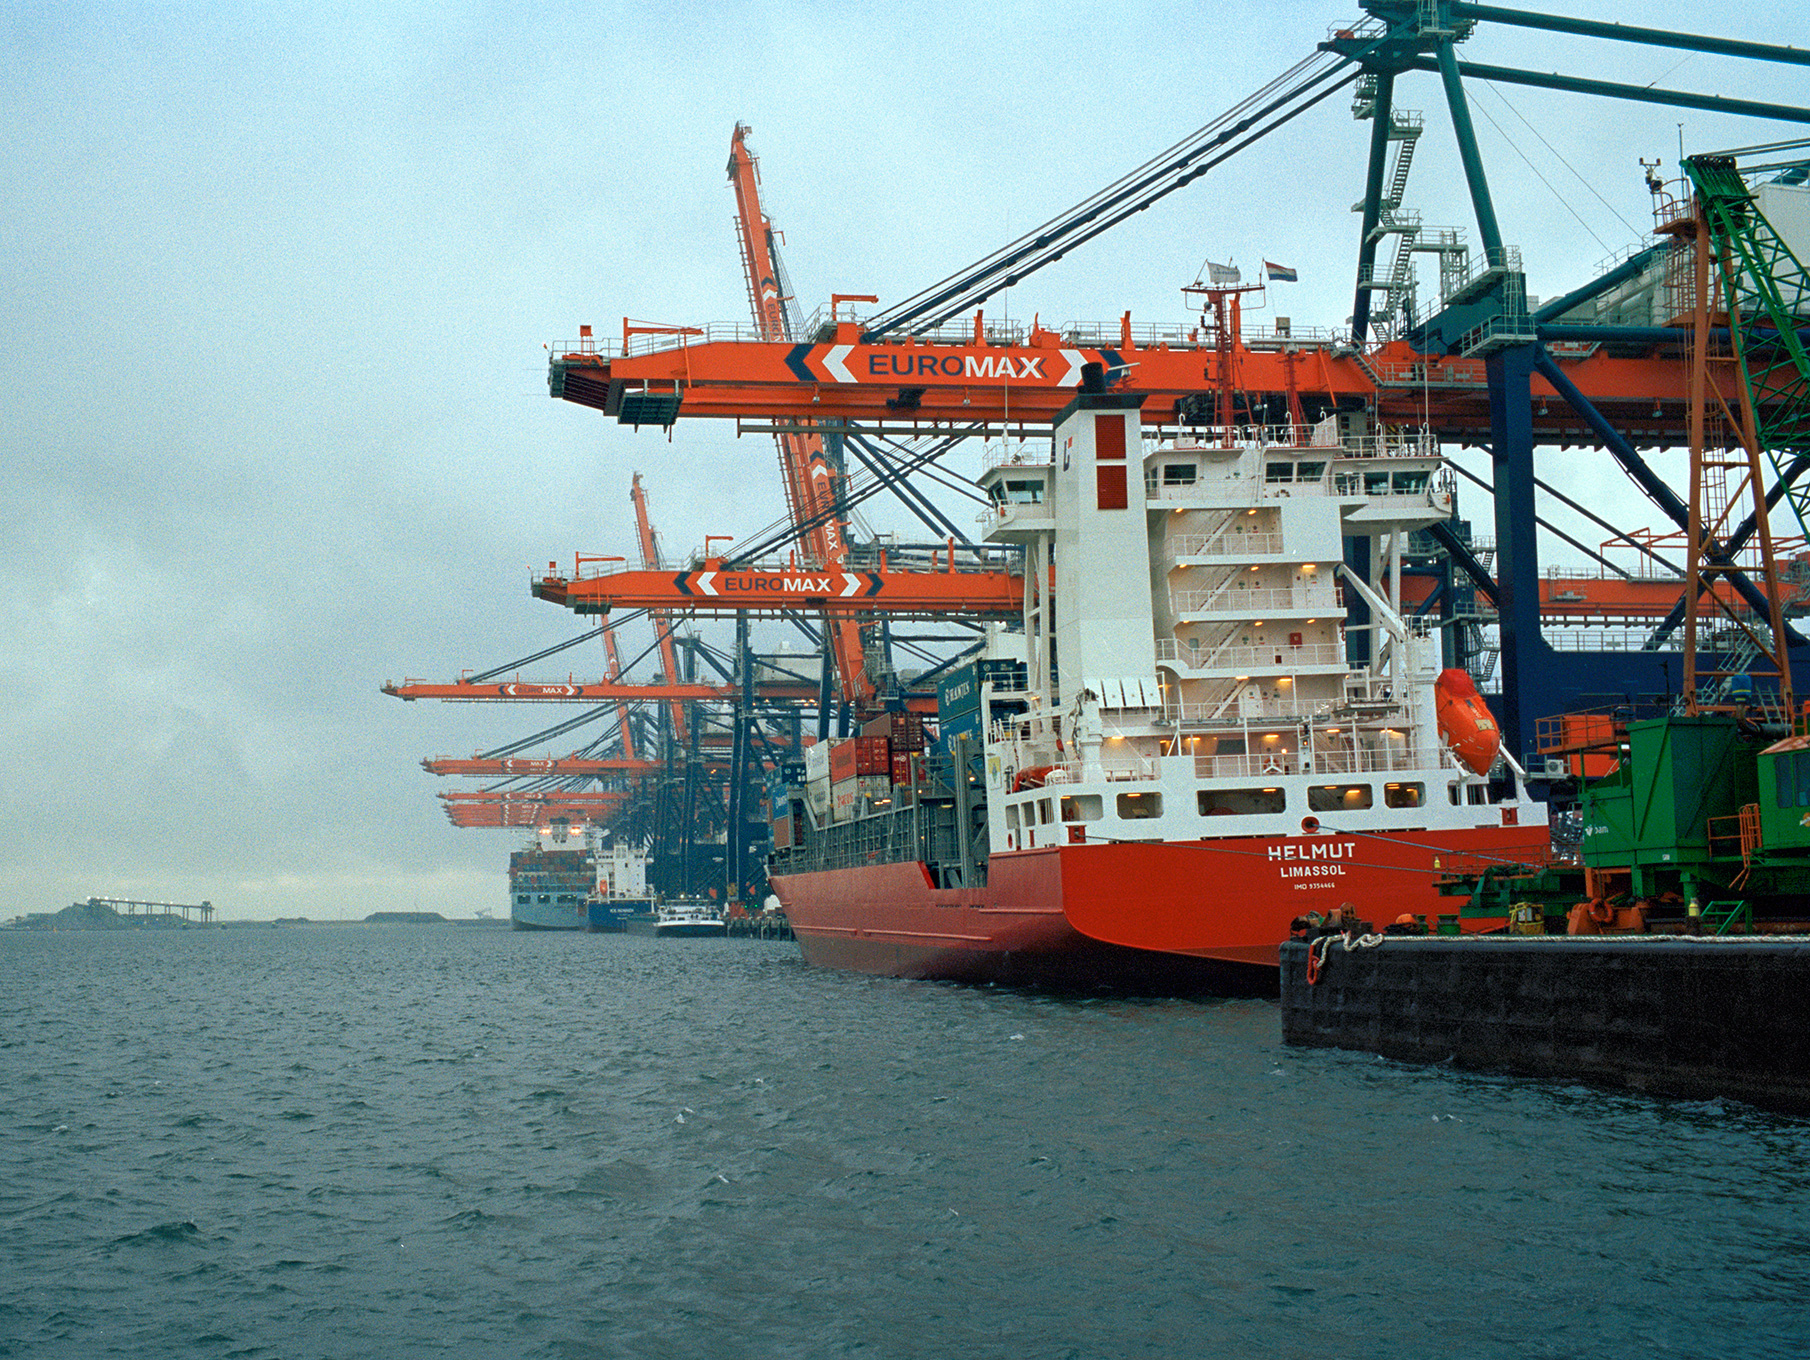   Container ship,  Maasvlakte, 2010  